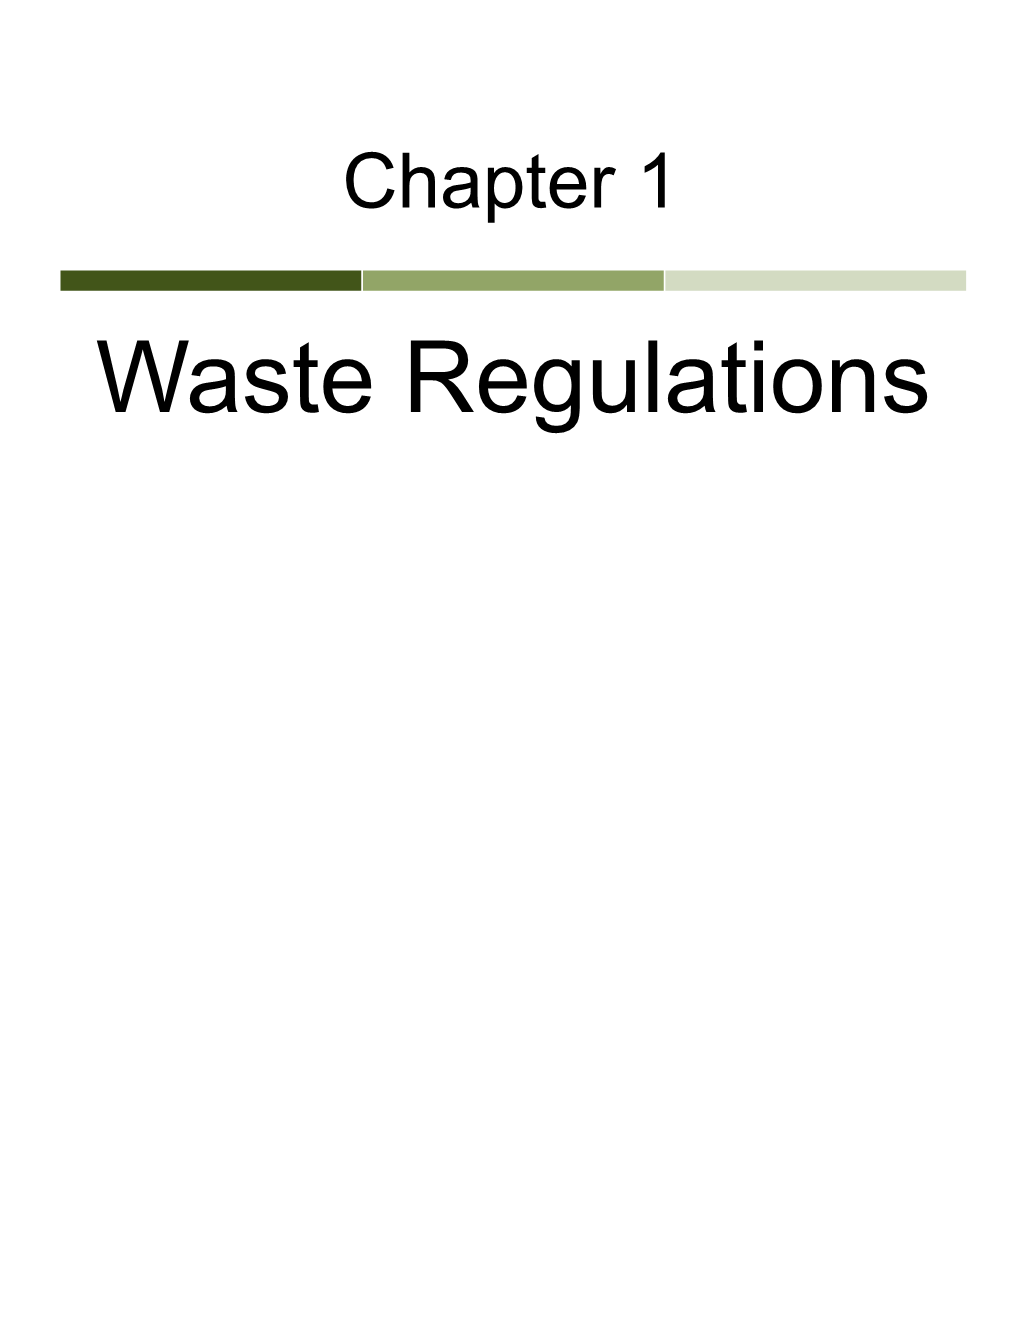 Waste Characterization Regulations